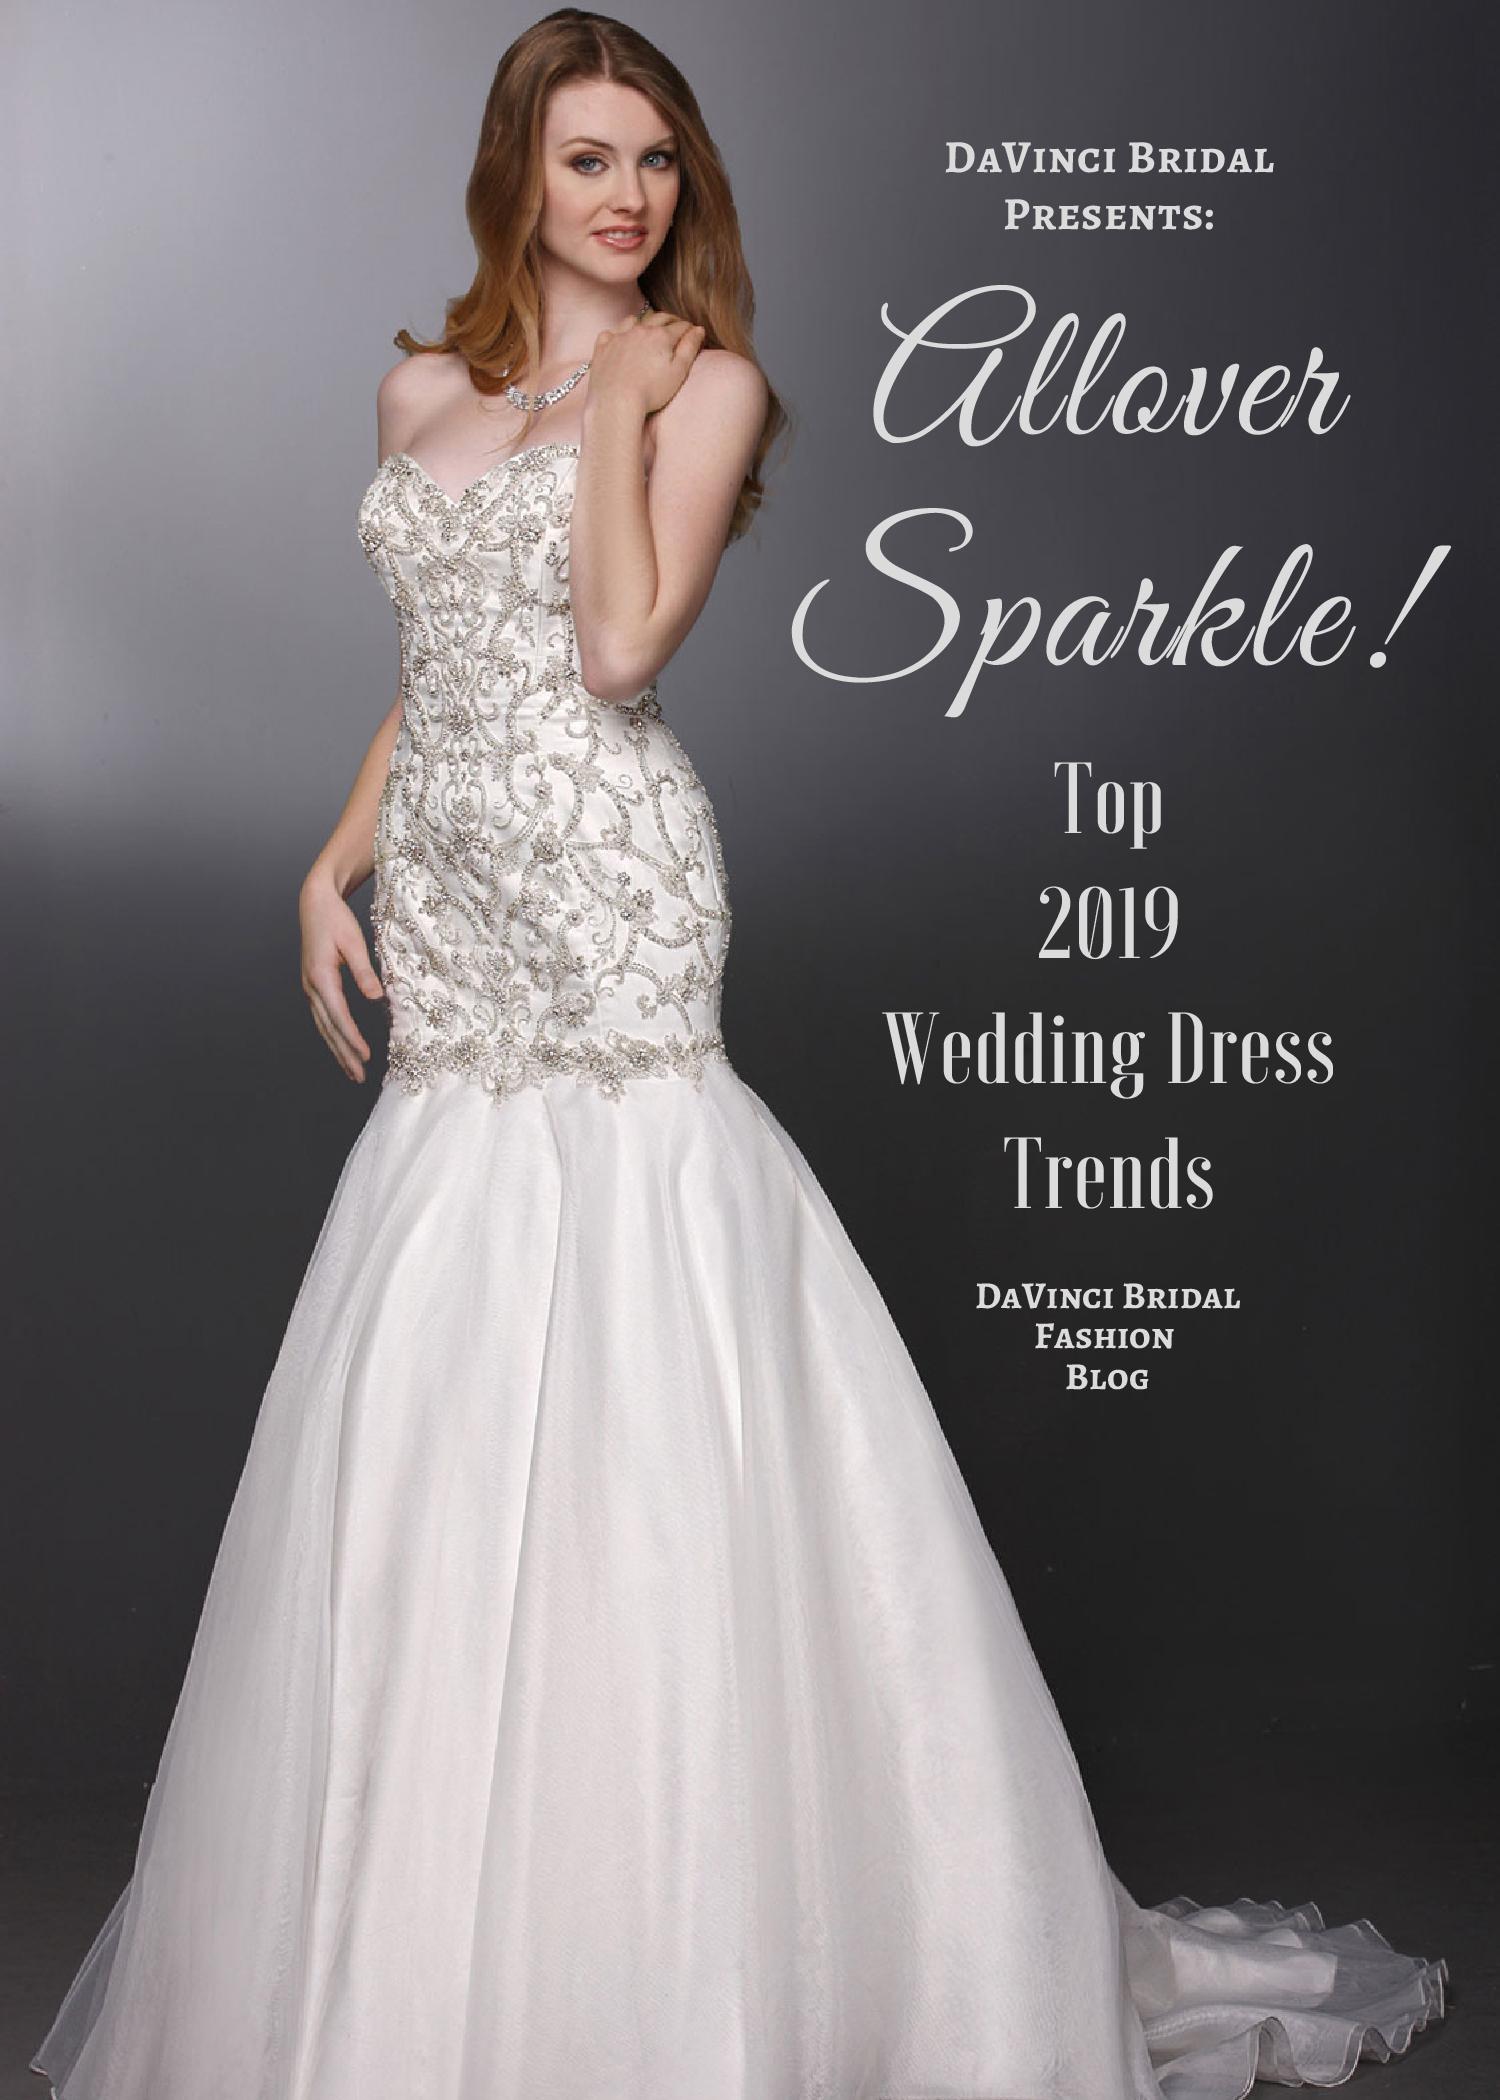 Top 2019 Wedding Dress Trends Allover Sparkle %E2%80%93 DaVinci Bridal Fashion Blog